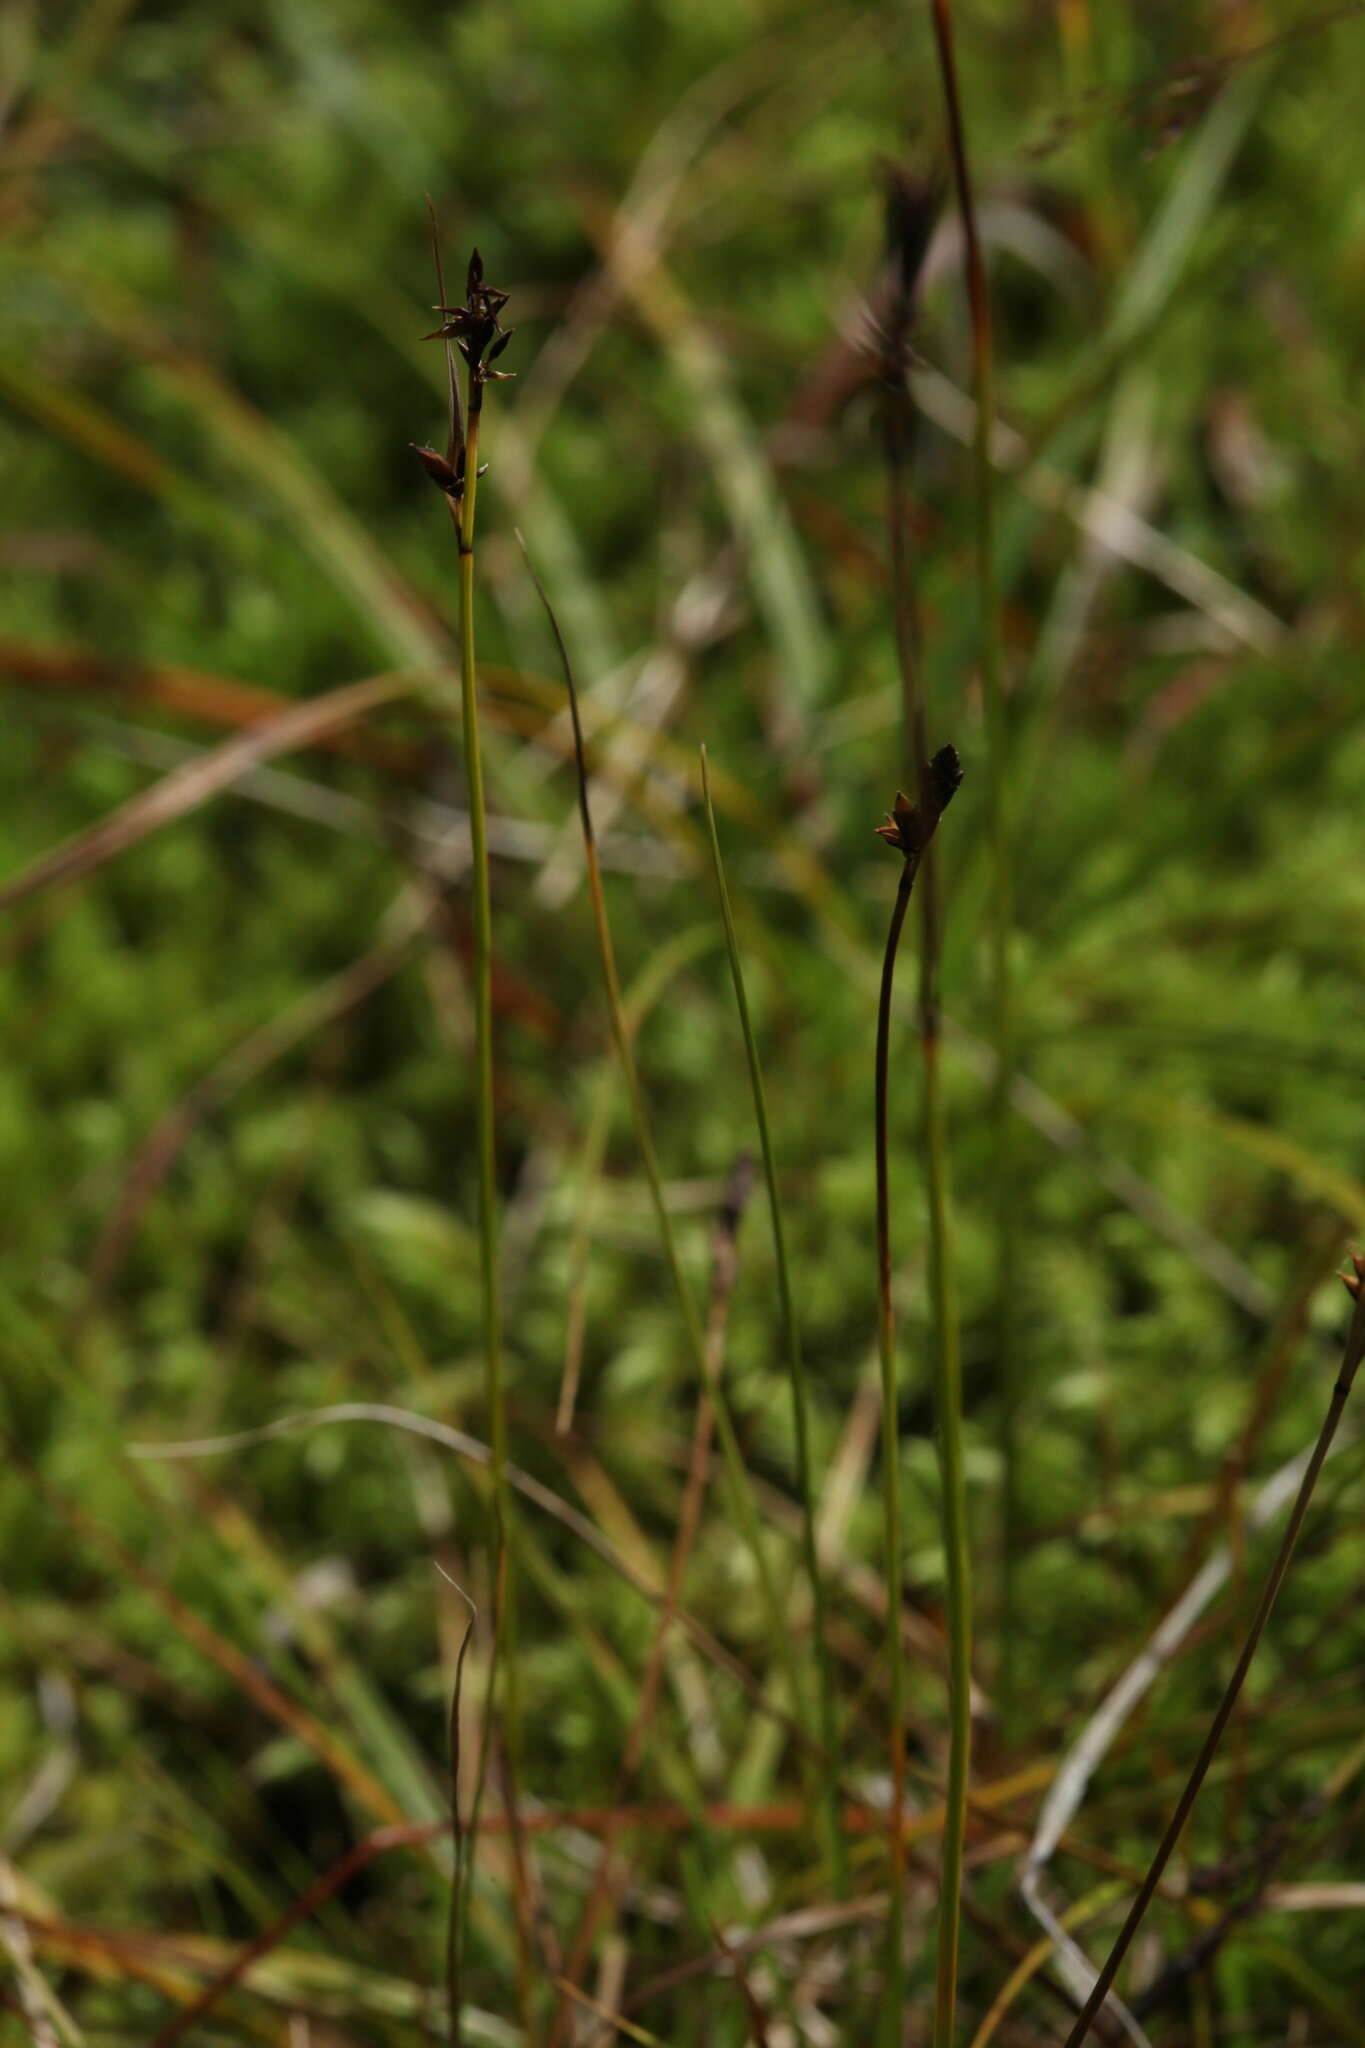 Image of Carex lachenalii subsp. lachenalii